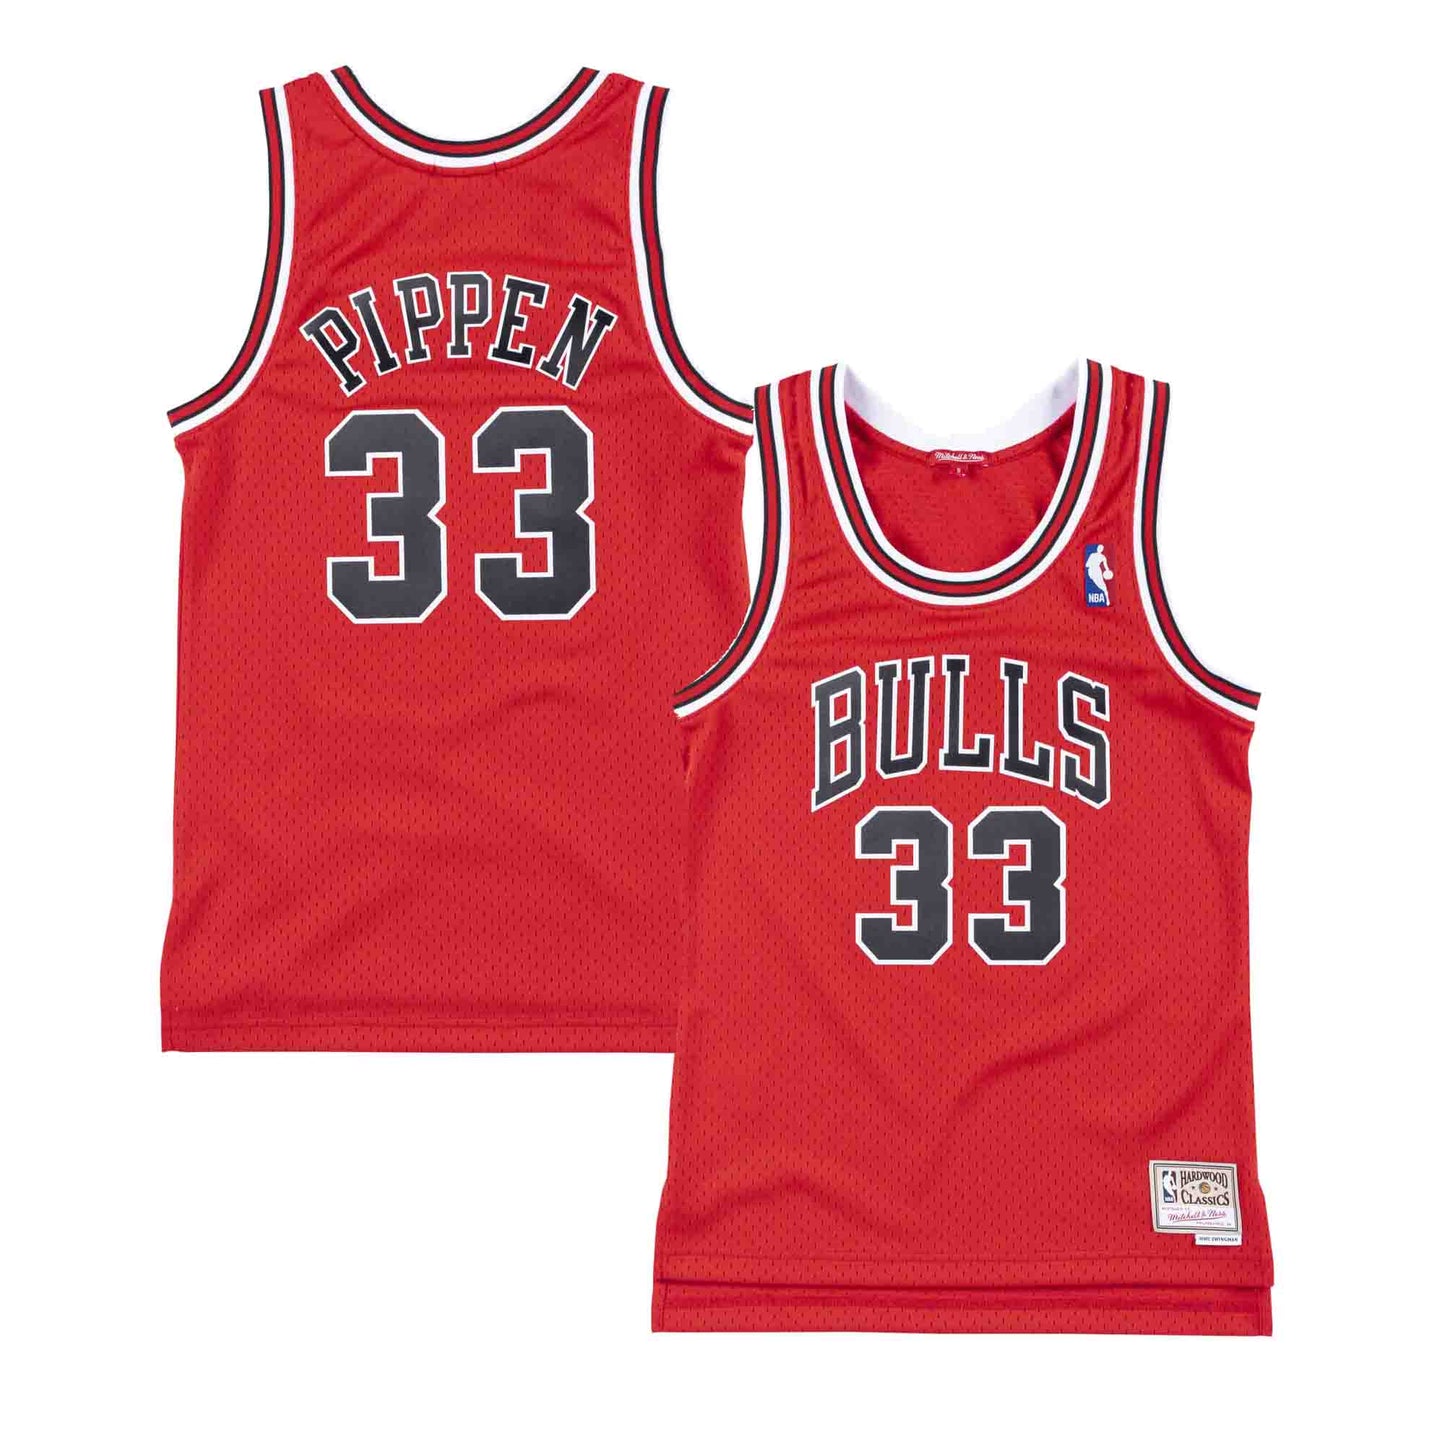 Women's NBA Swingman Jersey Chicago Bulls 1997-98 Scottie Pippen #33